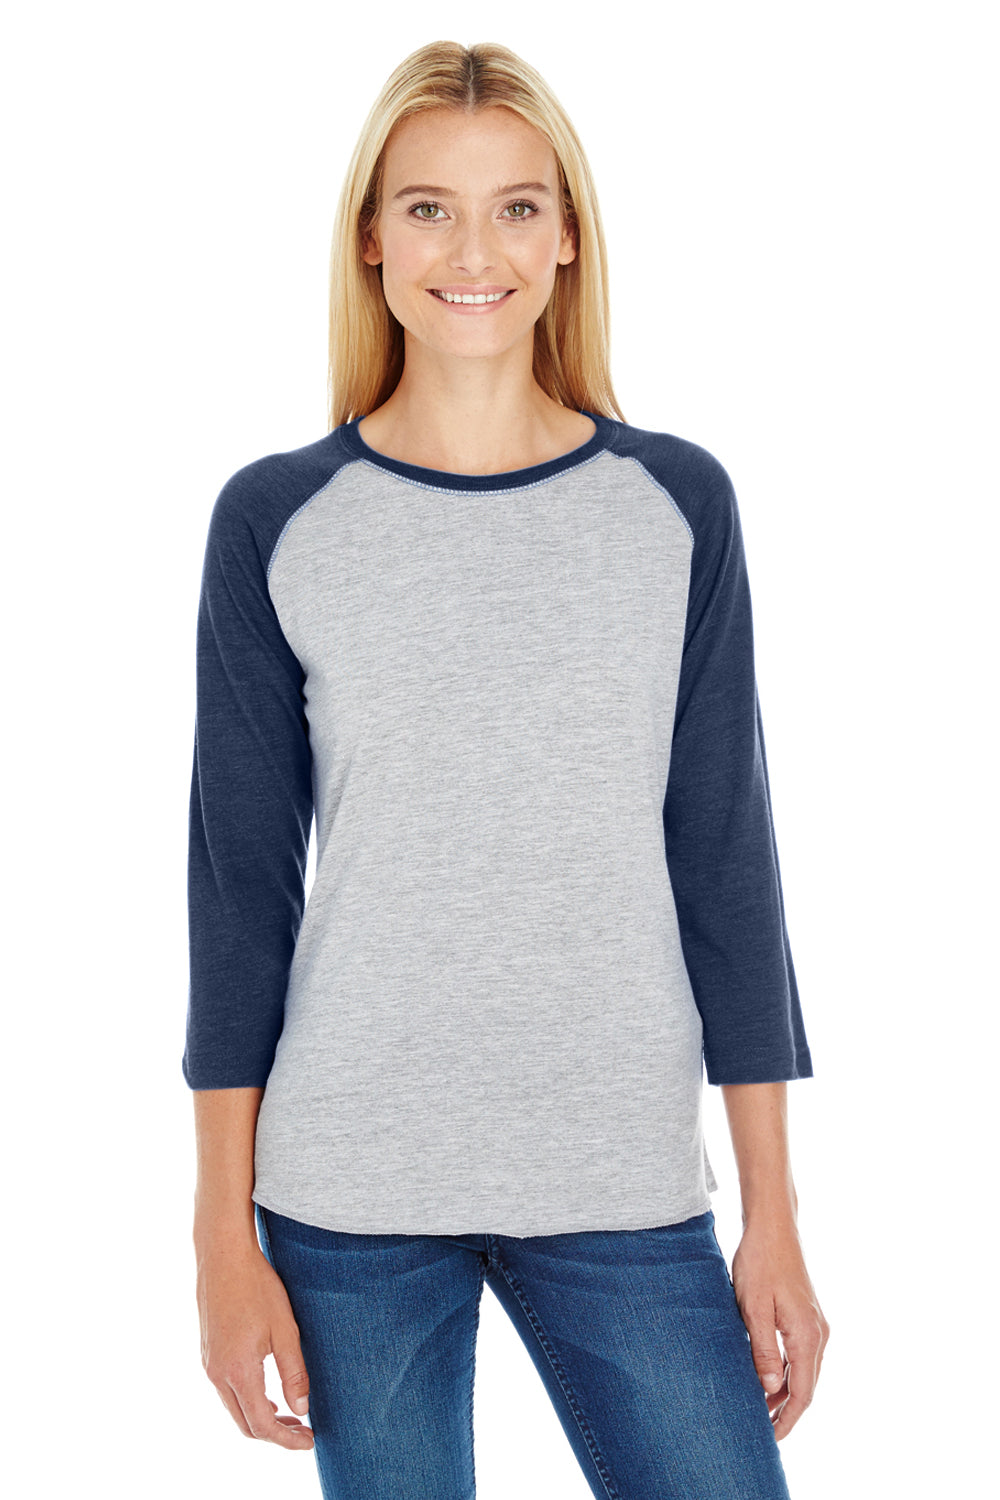 LAT LA3530 Womens Fine Jersey 3/4 Sleeve Crewneck T-Shirt Heather Grey/Navy Blue Front